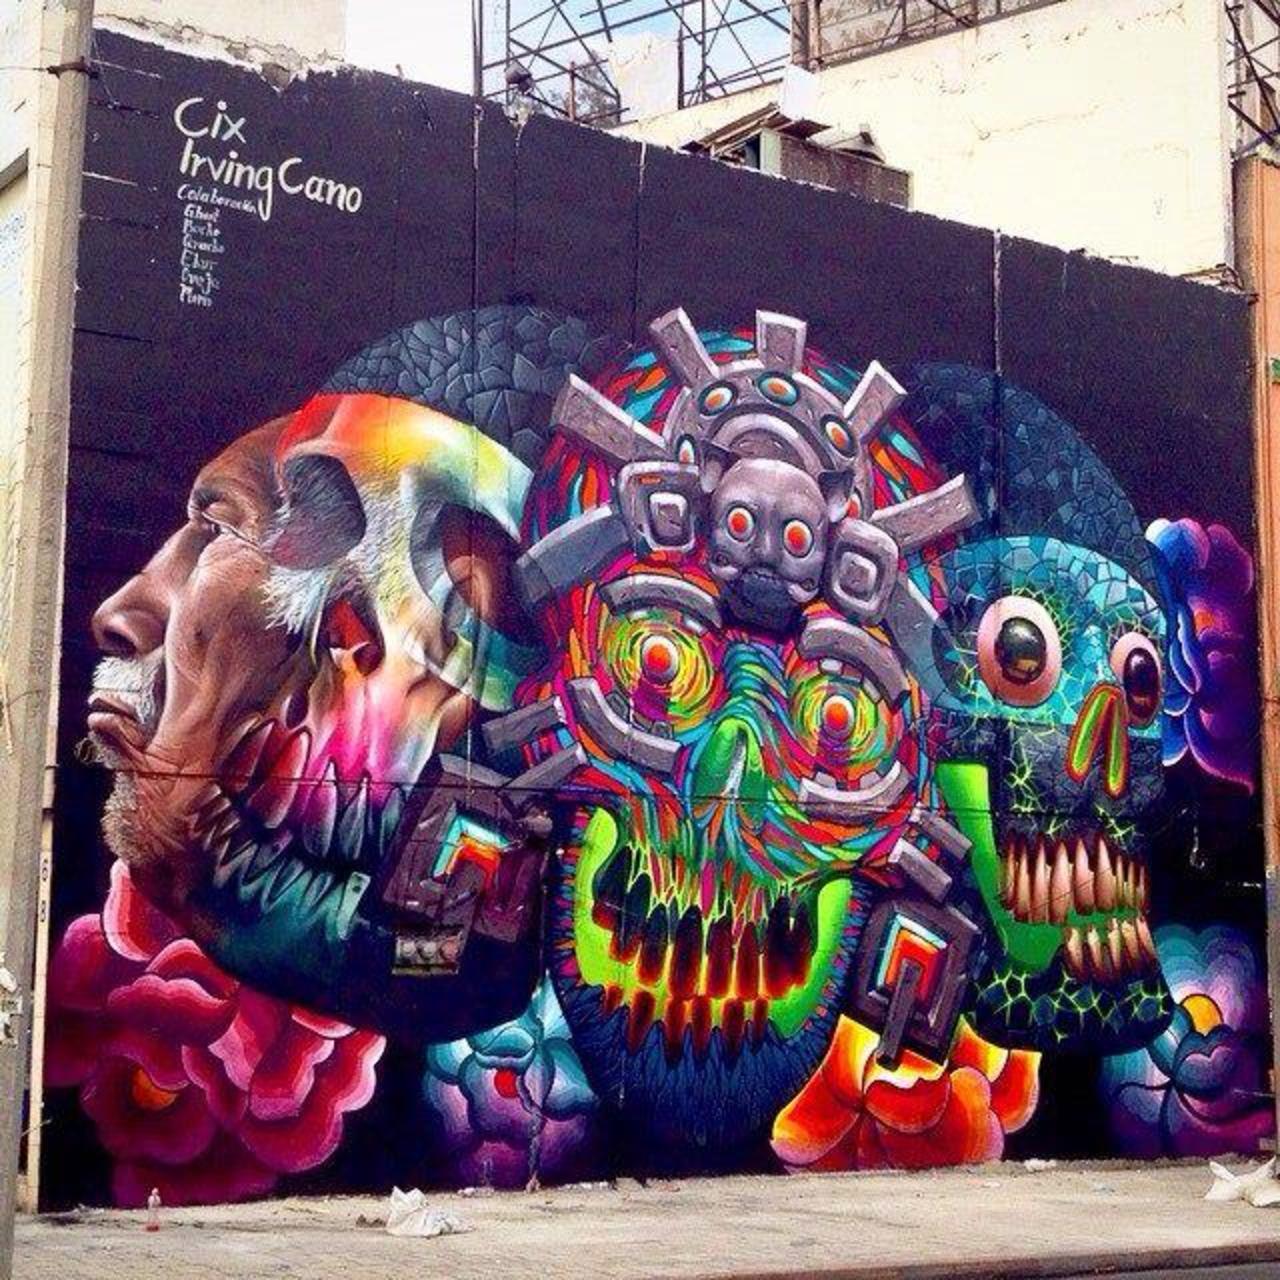 New Street Art by Irving Cano and Cix in México.

#art #arte #graffiti #streetart http://t.co/dgotPsUjcQ